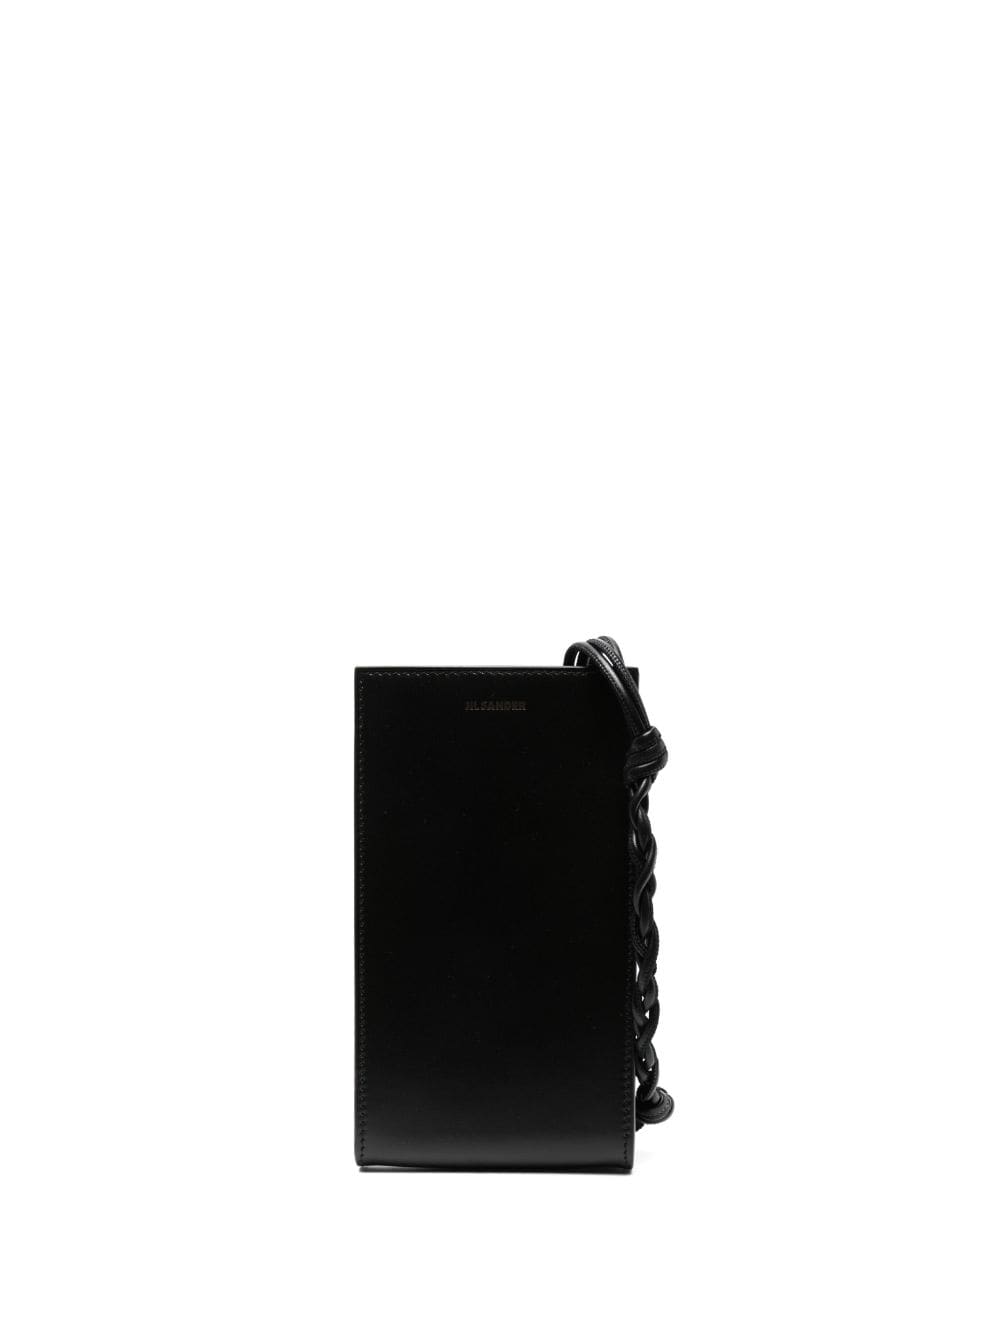 Jil Sander Tangle leather phone case